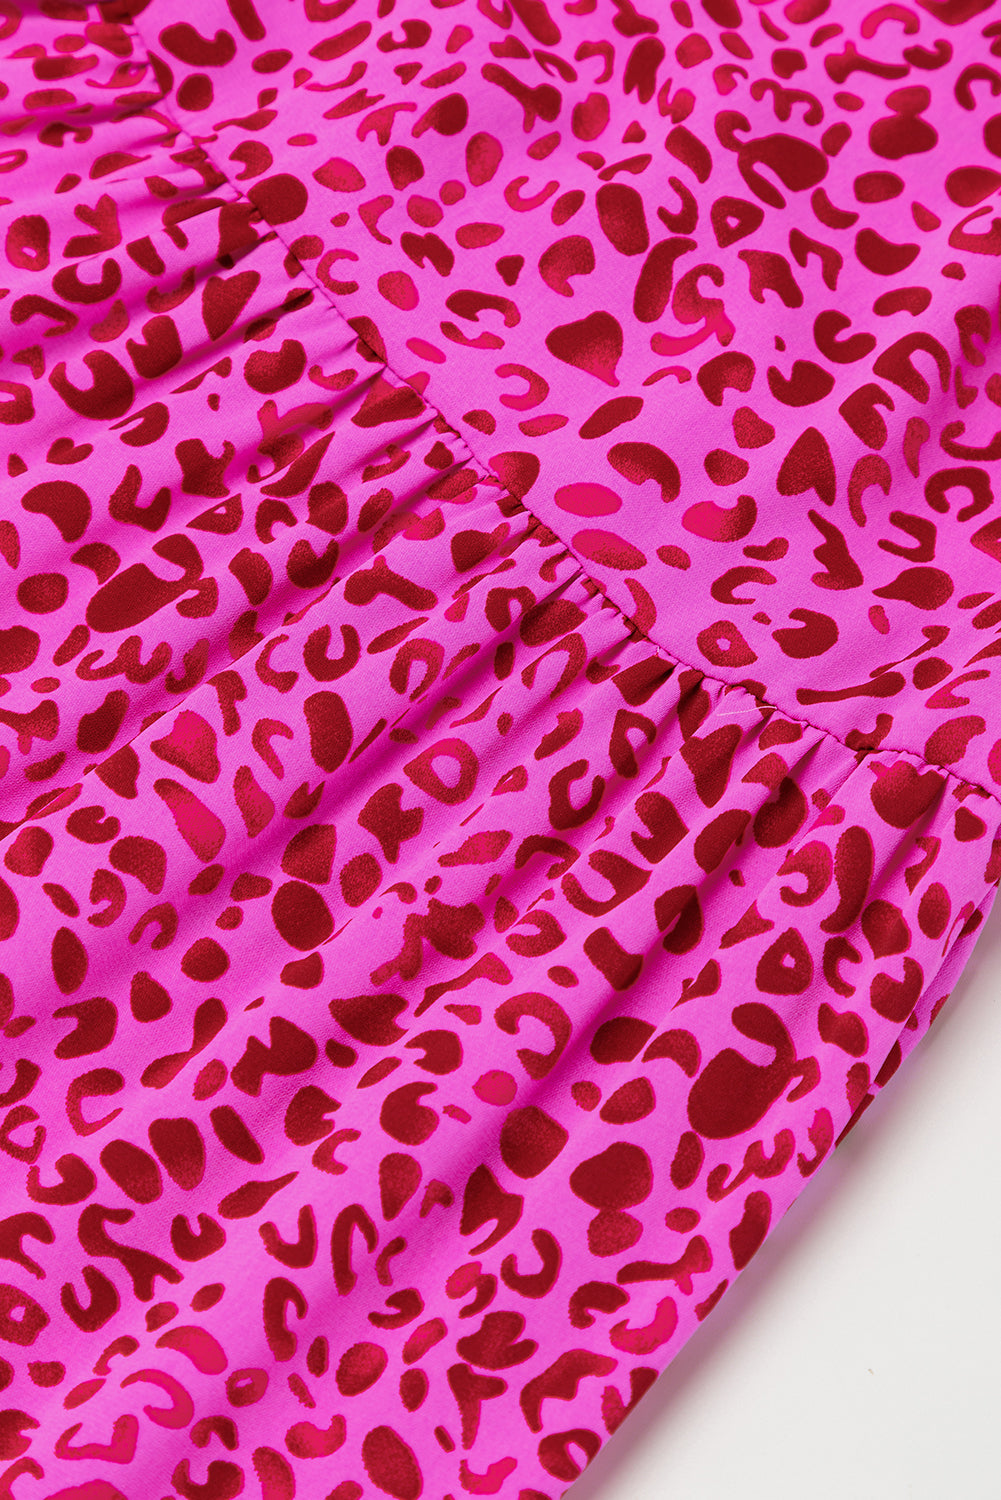 Pink Short Sleeve Long Dress Casual Womens  Fashion Leopard Print Ruffled Trim Tiered Maxi Dress